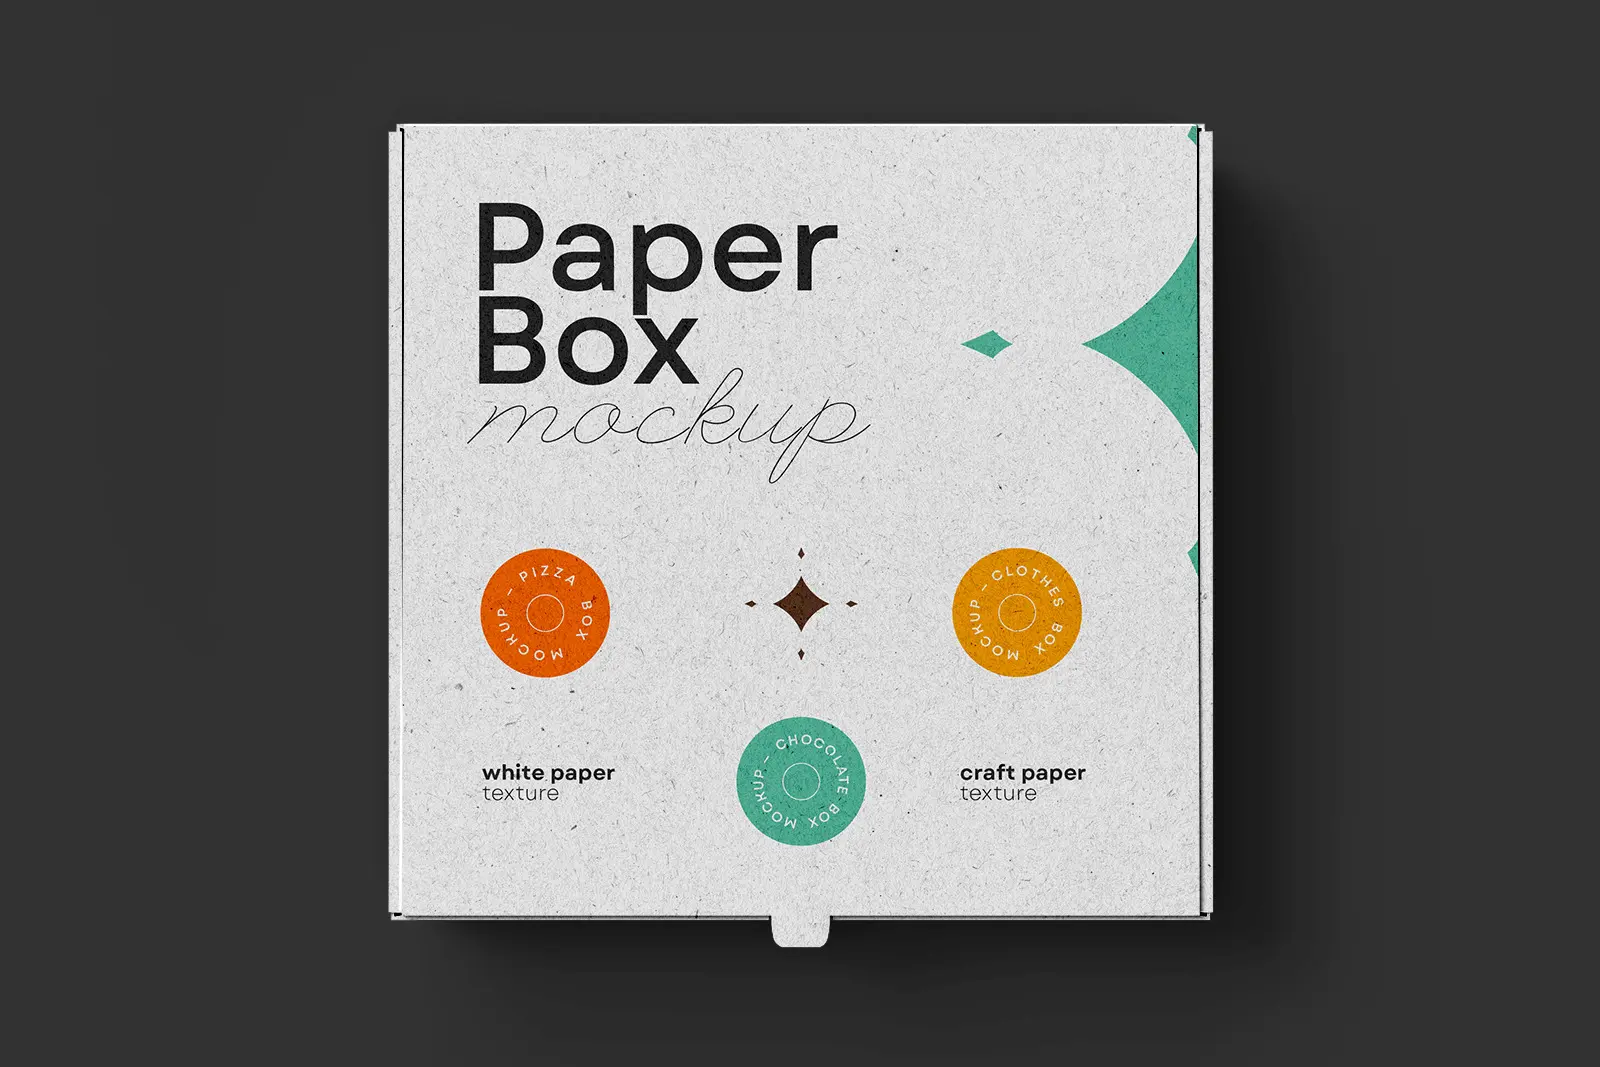 Free Takeaway Pizza Box Packaging Mockup PSD Set - Good Mockups